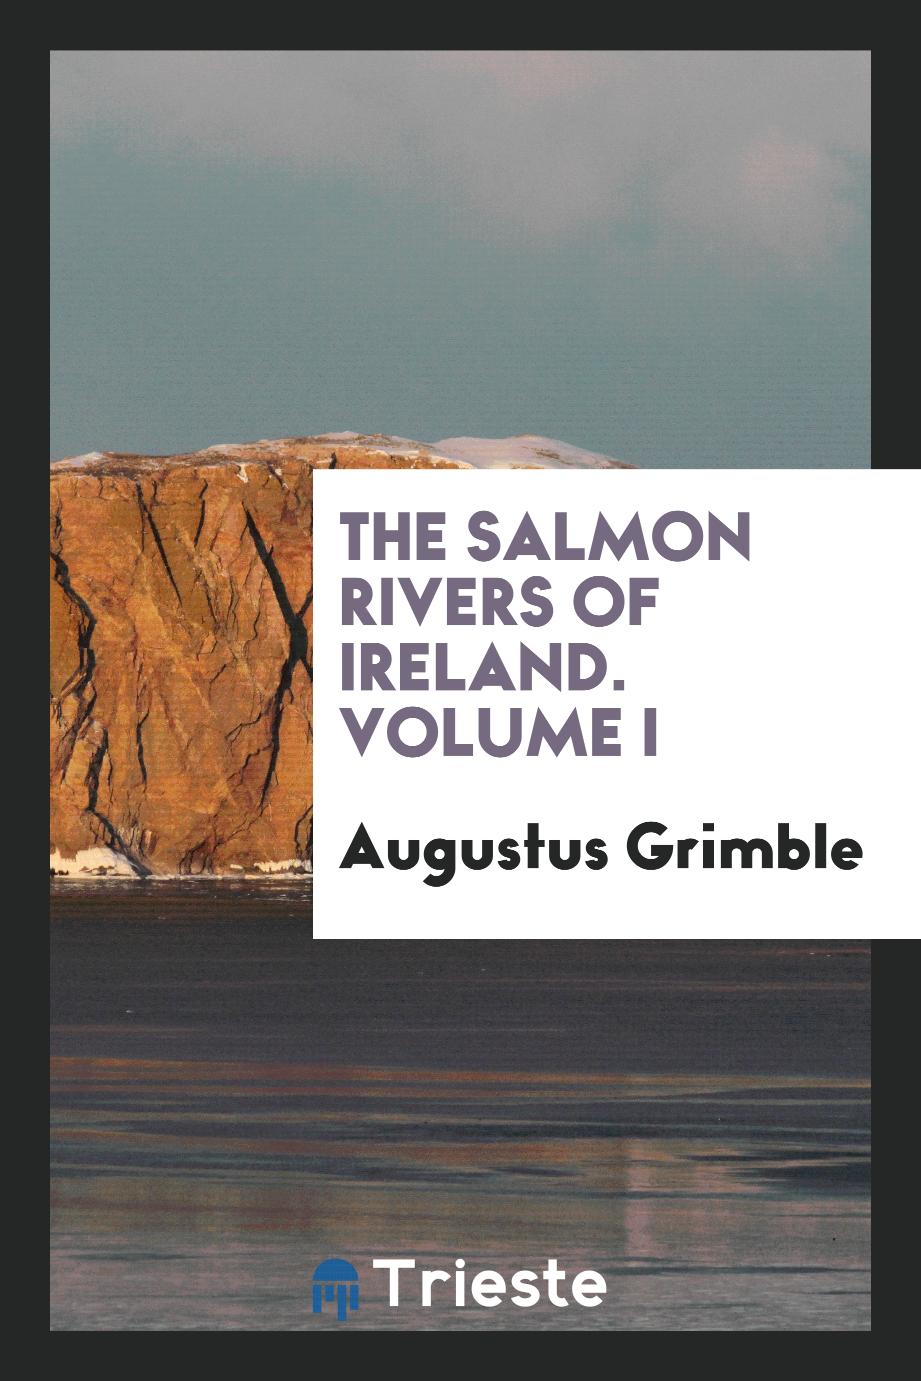 The Salmon Rivers of Ireland. Volume I